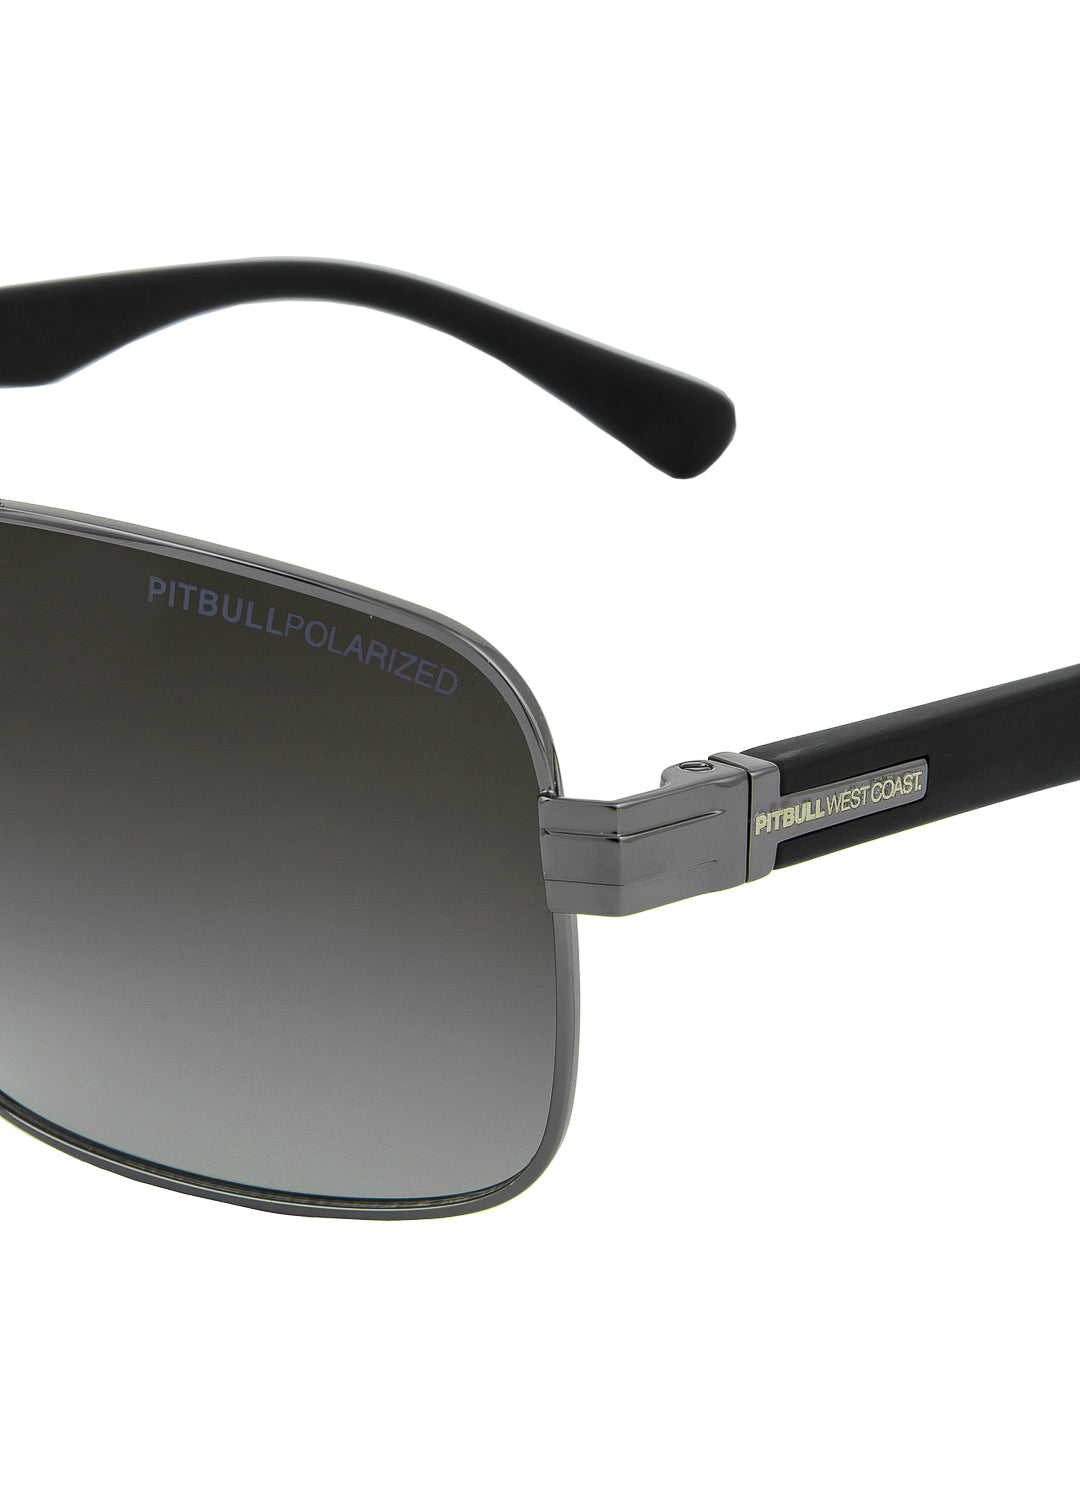 Sunglasses HOFER Black - Pitbull West Coast International Store 